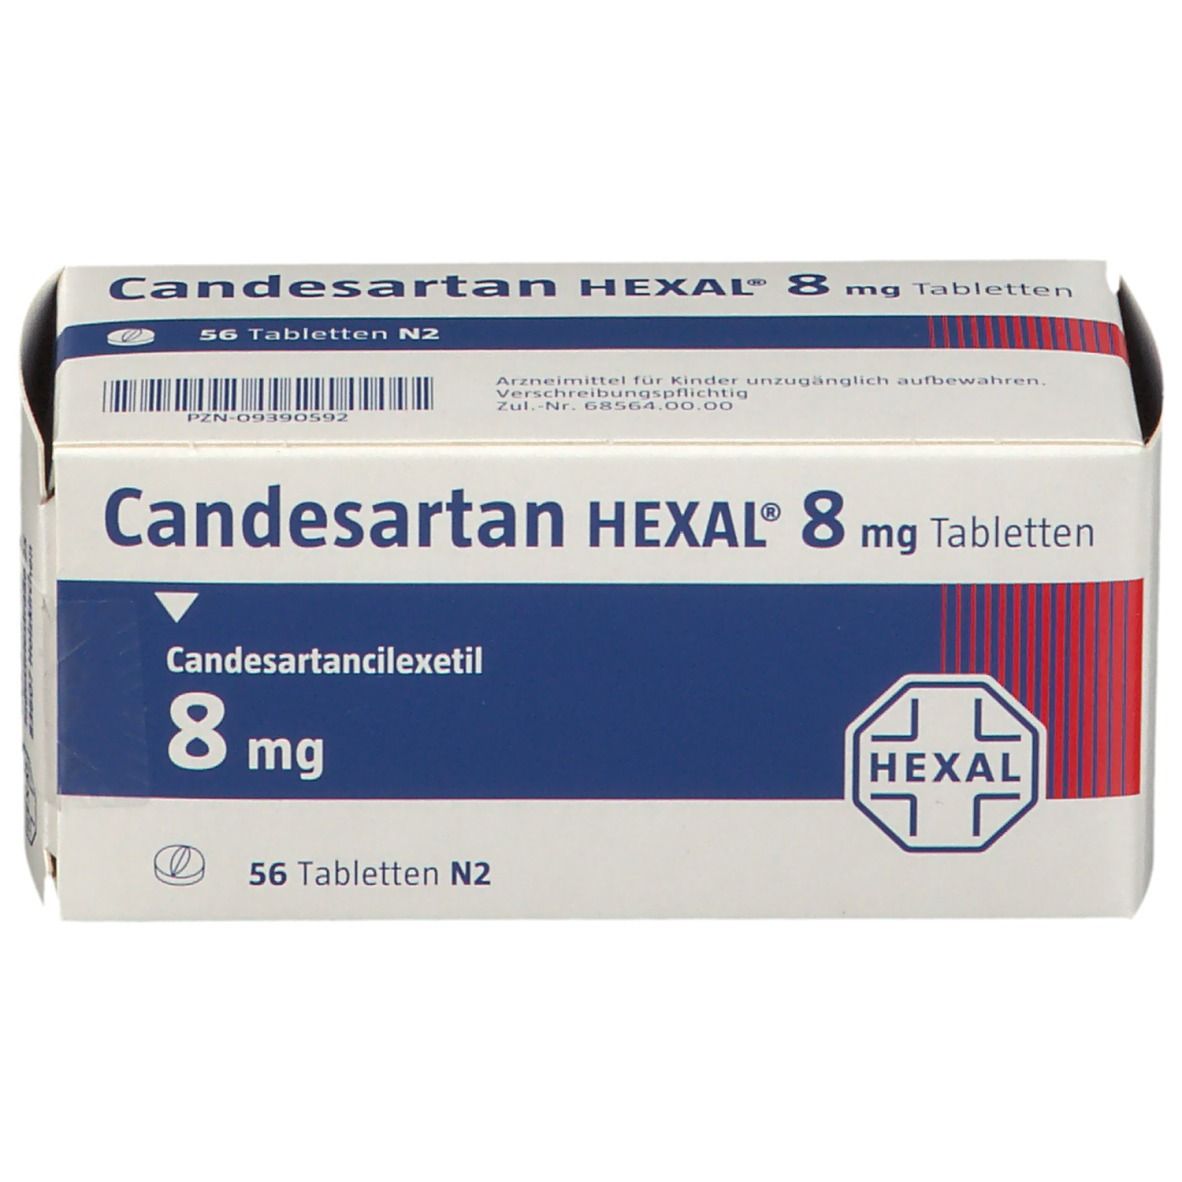 Candesartan HEXAL® 8 mg